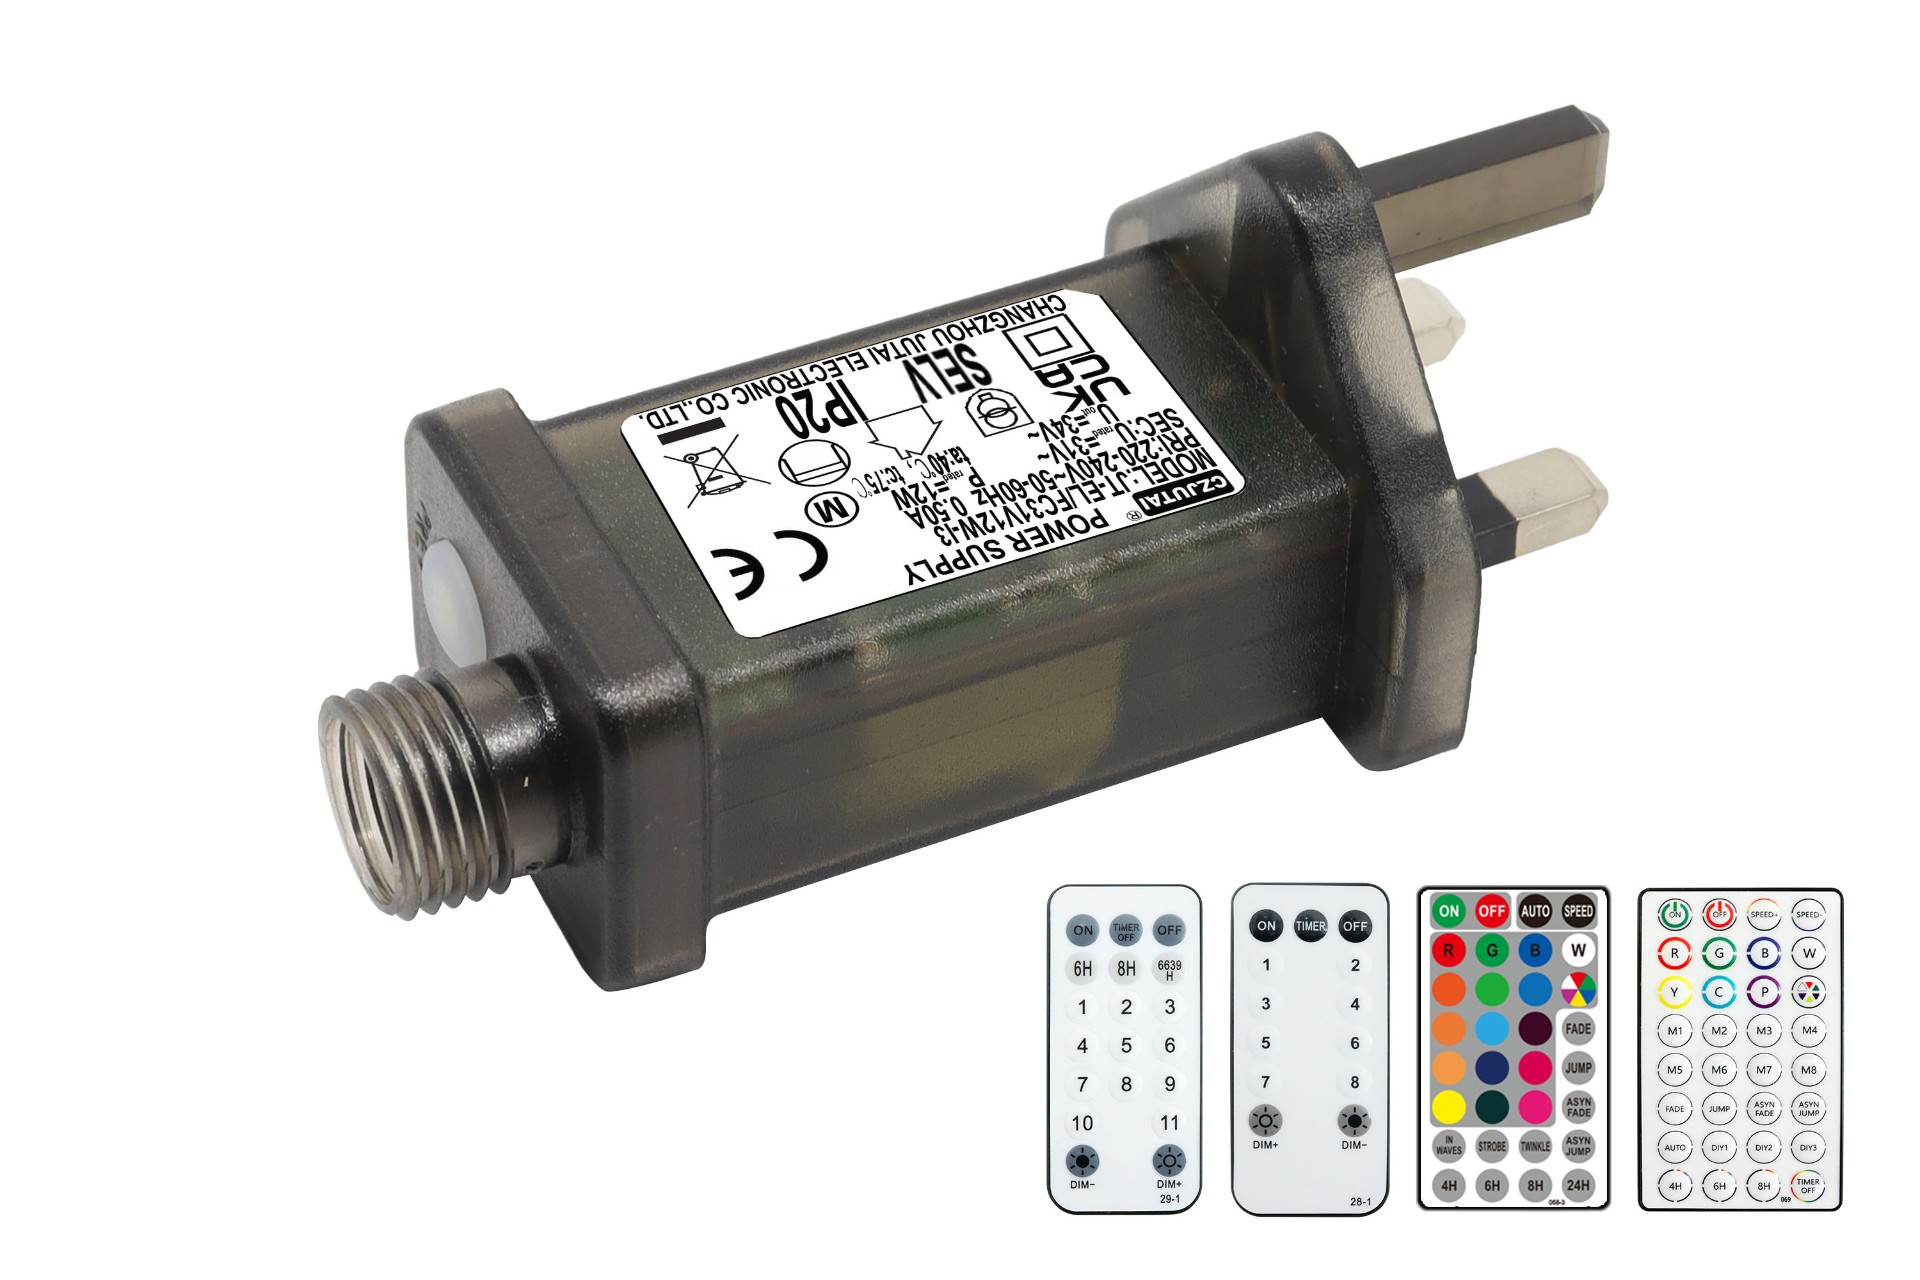 15W Series UKCA Infrared Remote Control Power Supply